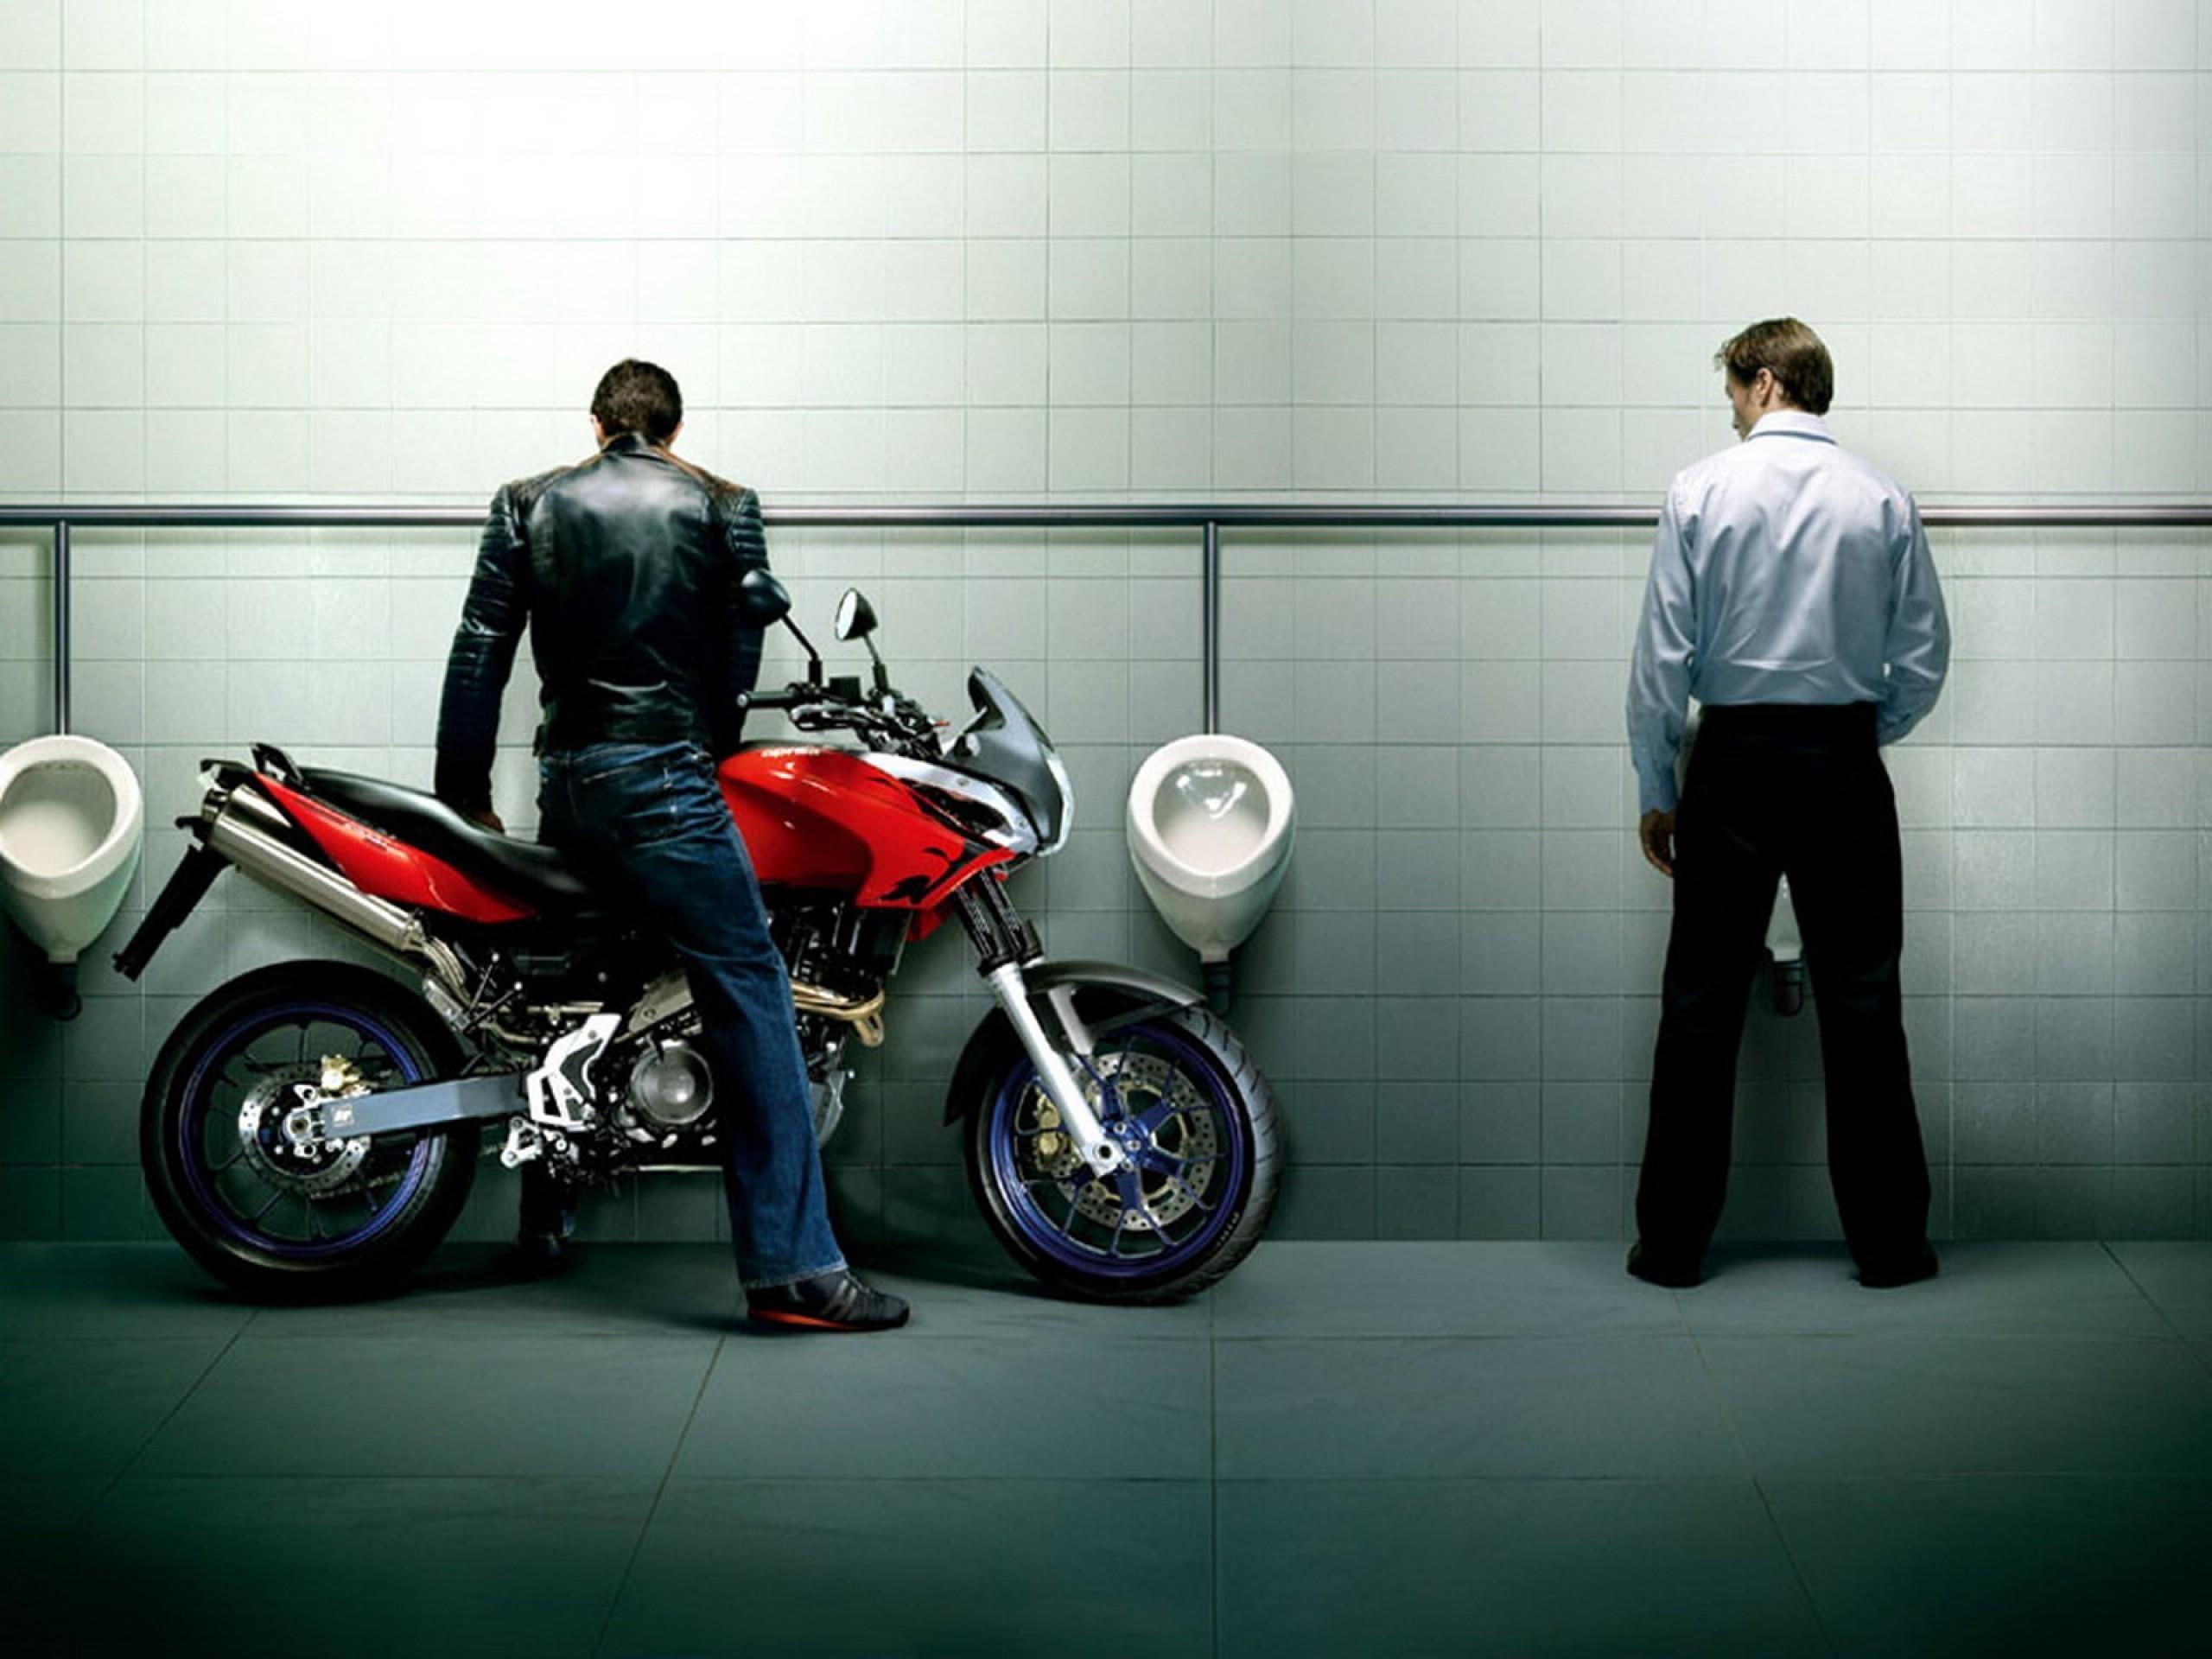 Мужчина в люльке. Креативные мотоциклы. Реклама мотоциклов. Креативная реклама мотоциклов. Смешные мотоциклы.